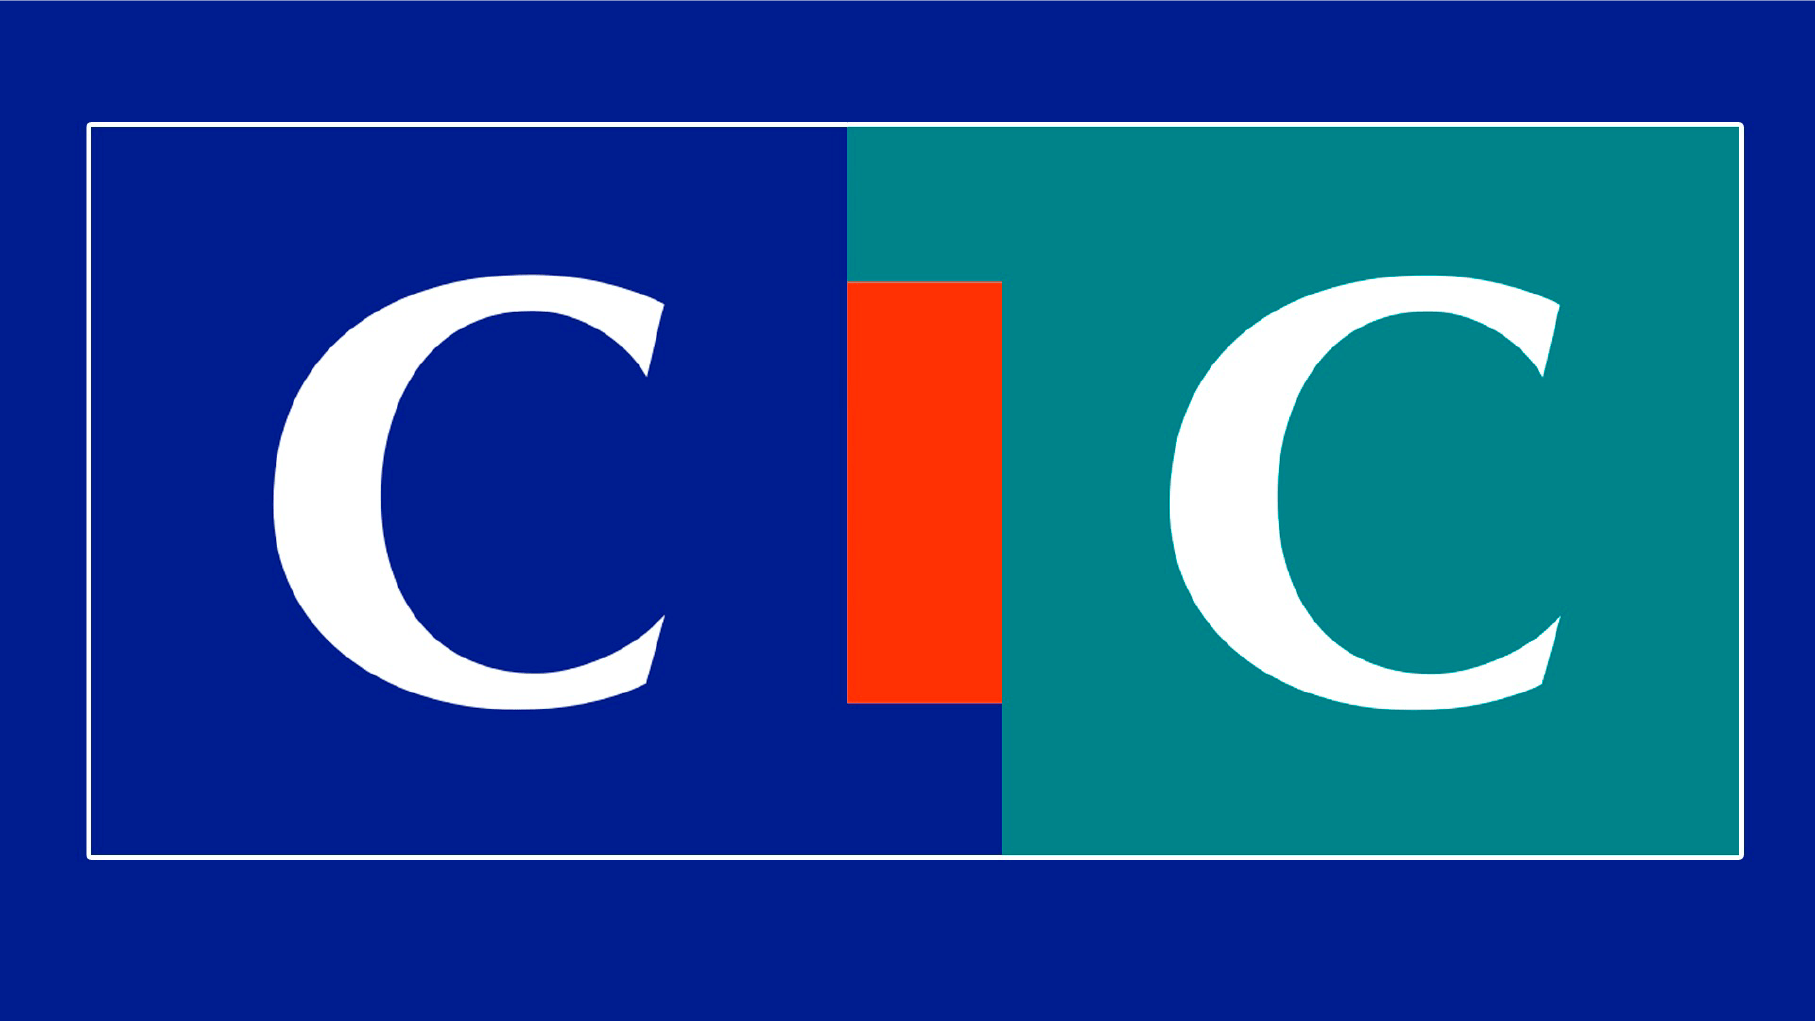 Logo Cic 450x300px